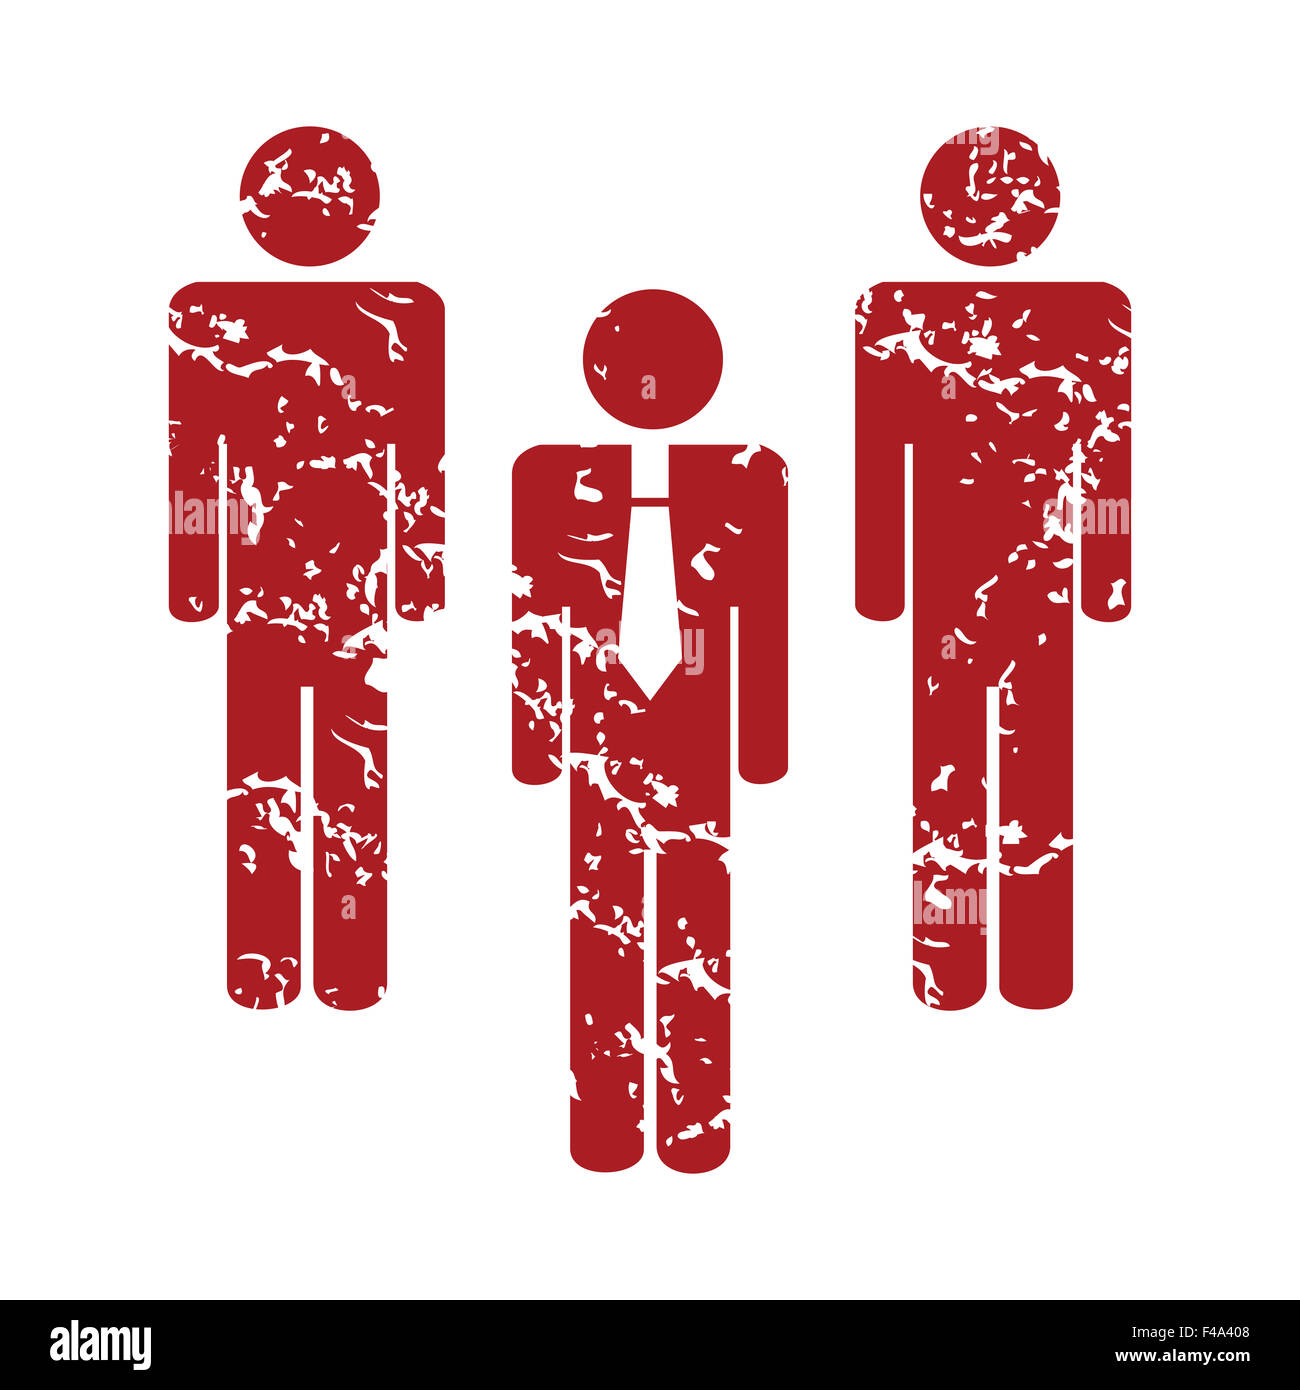 Red grunge working team logo Stock Photo